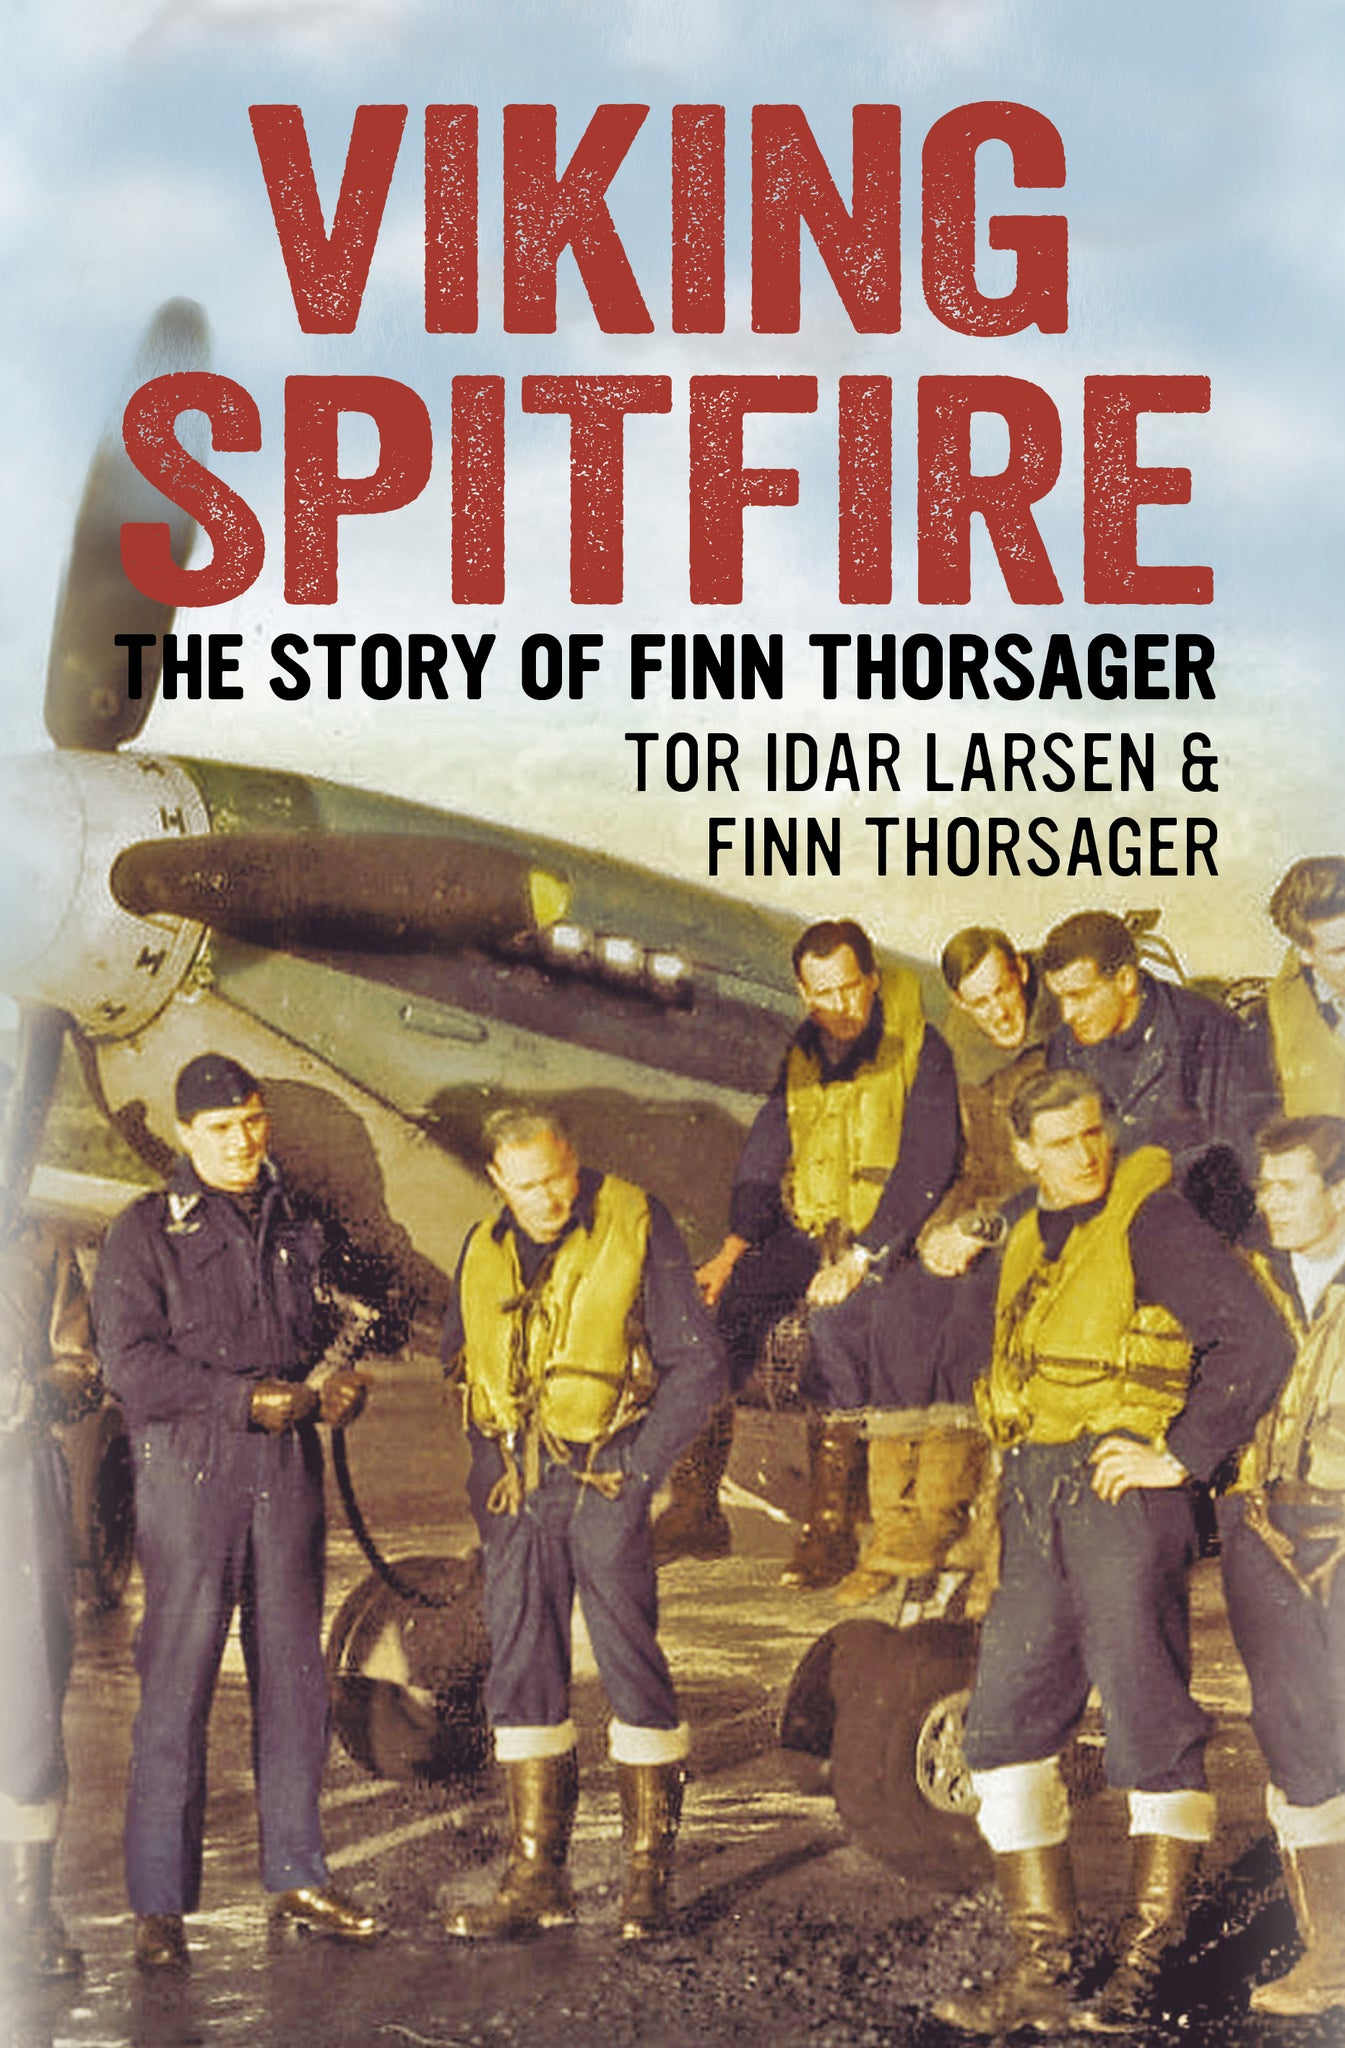 Viking Spitfire: The Story of Finn Thorsager